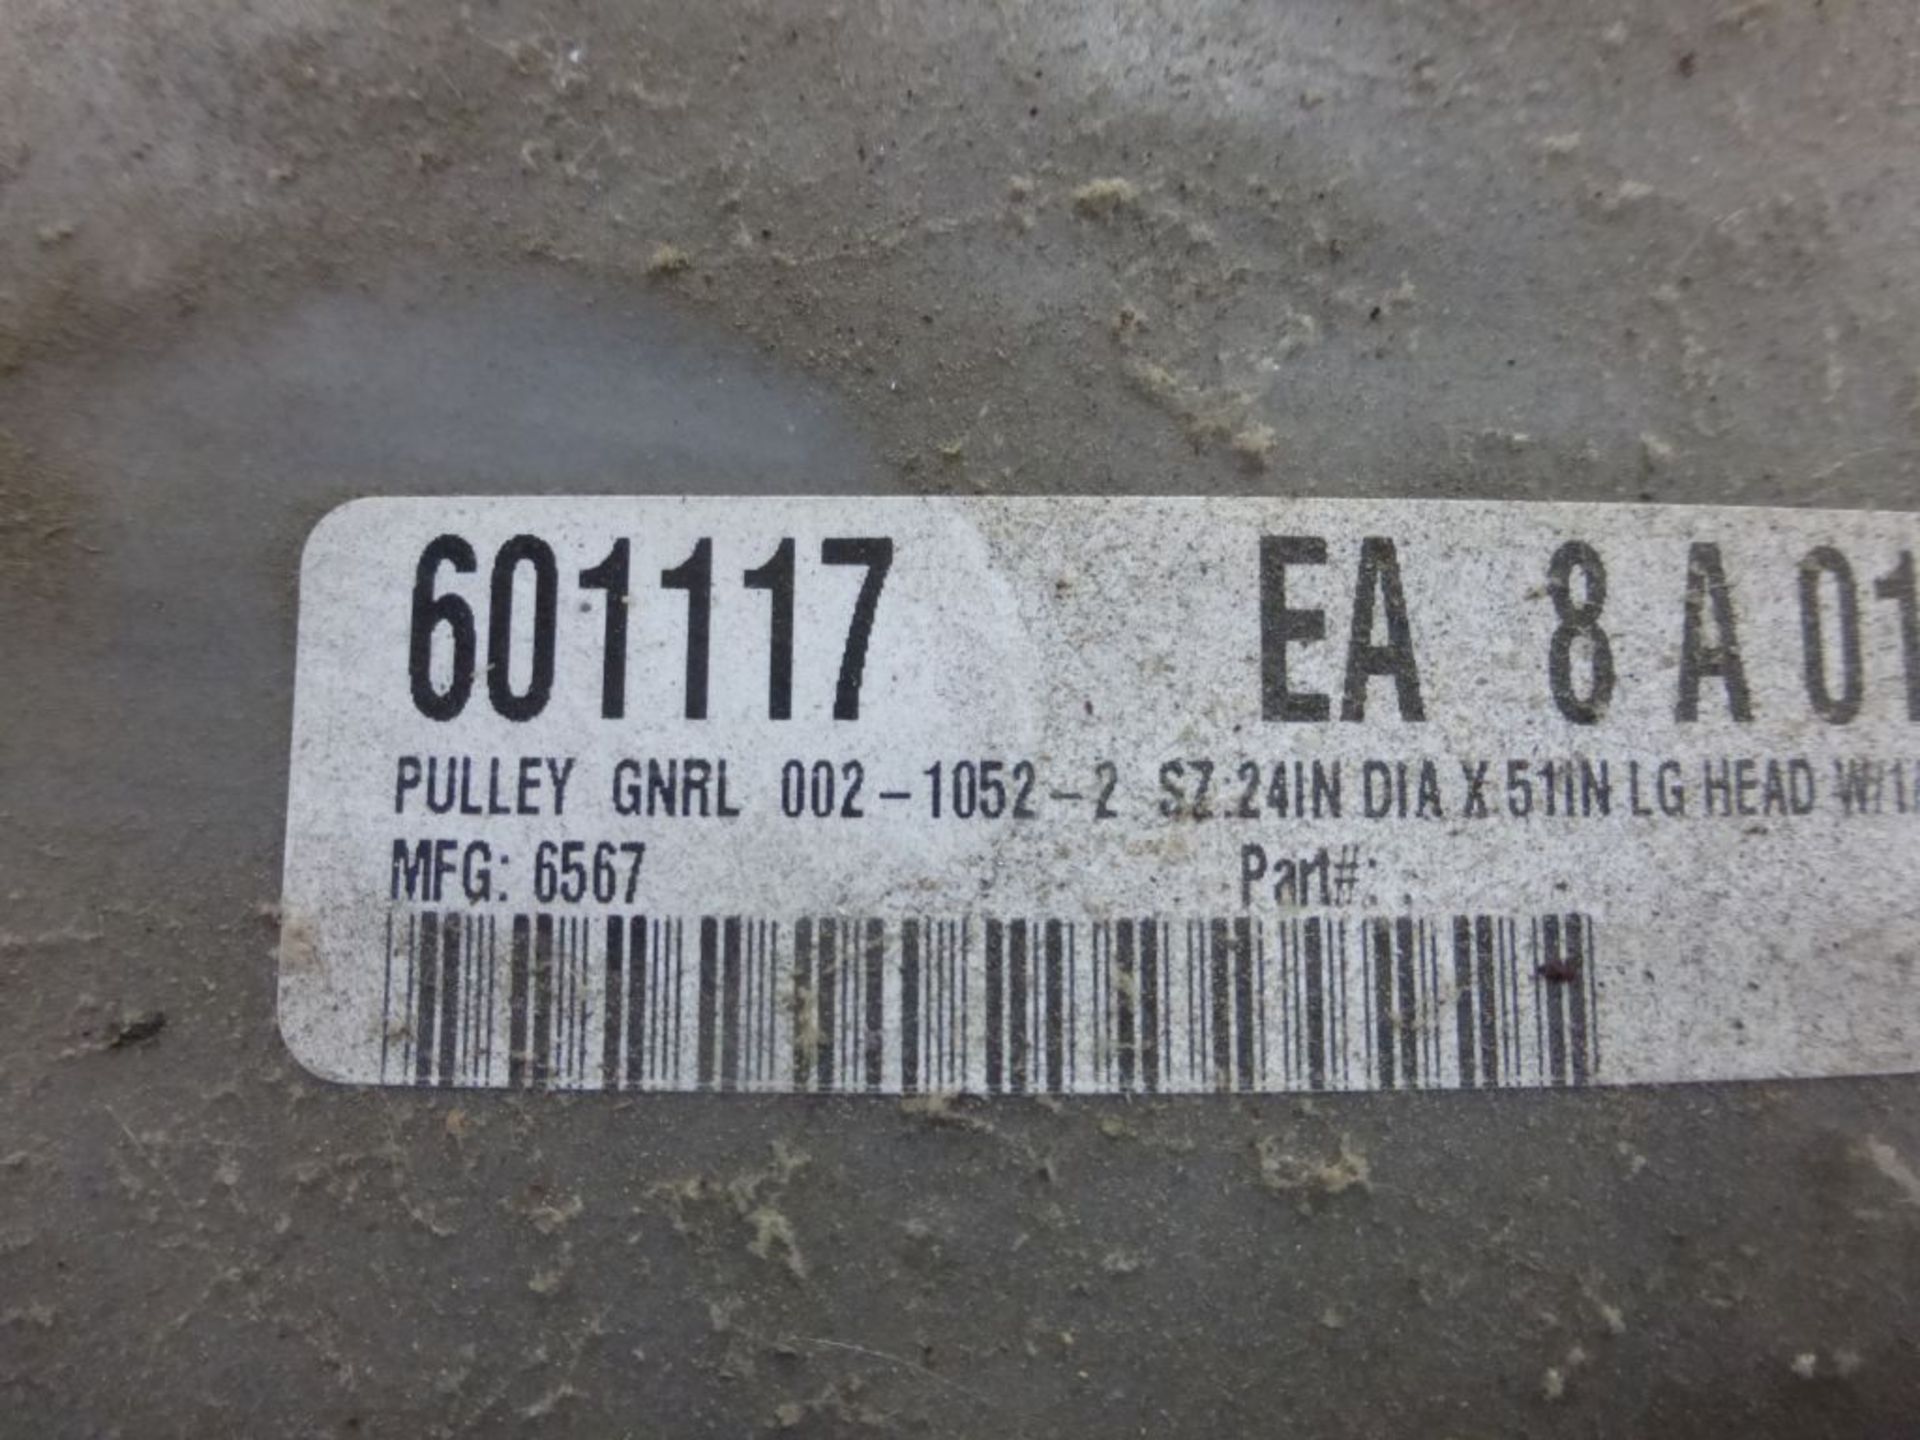 Baldor Dodge Heavy Duty Conveyor Pulley|Part No. CS151802305; 24"D x 51" LG Head - Image 4 of 7